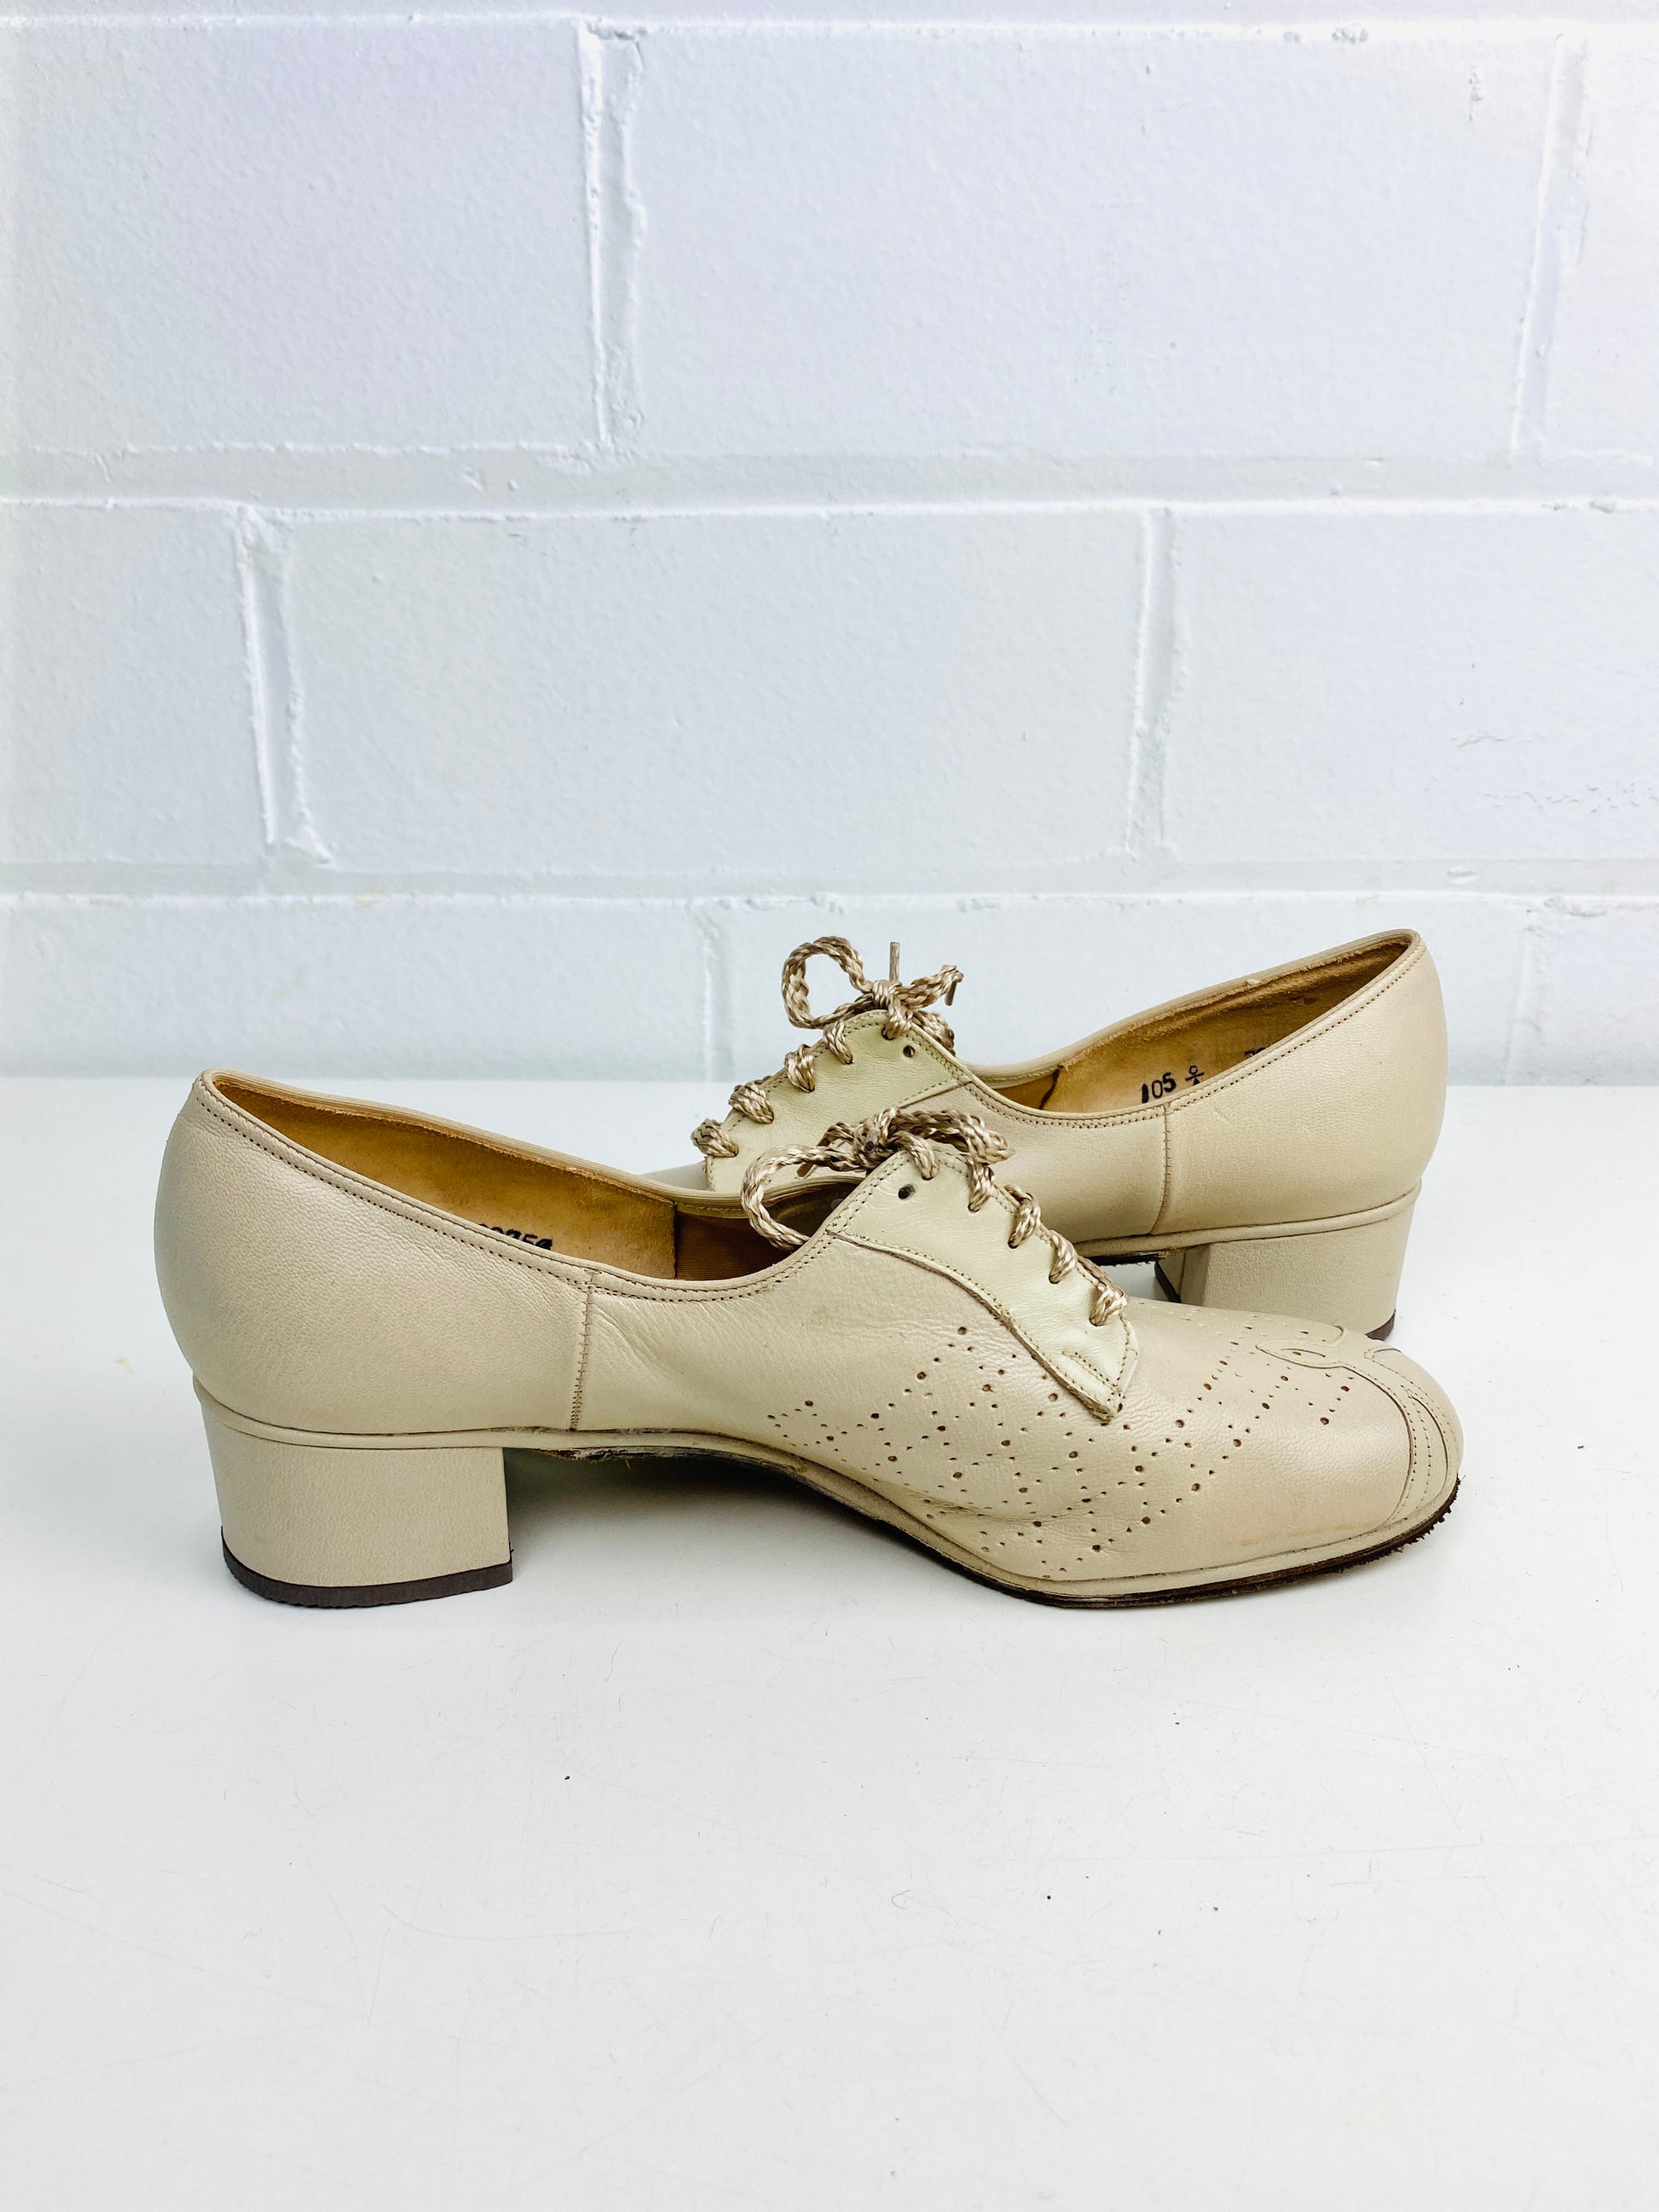 Vintage Deadstock Shoes, Women's 1980s Beige Leather Cuban Heel Oxfords, NOS, 1084